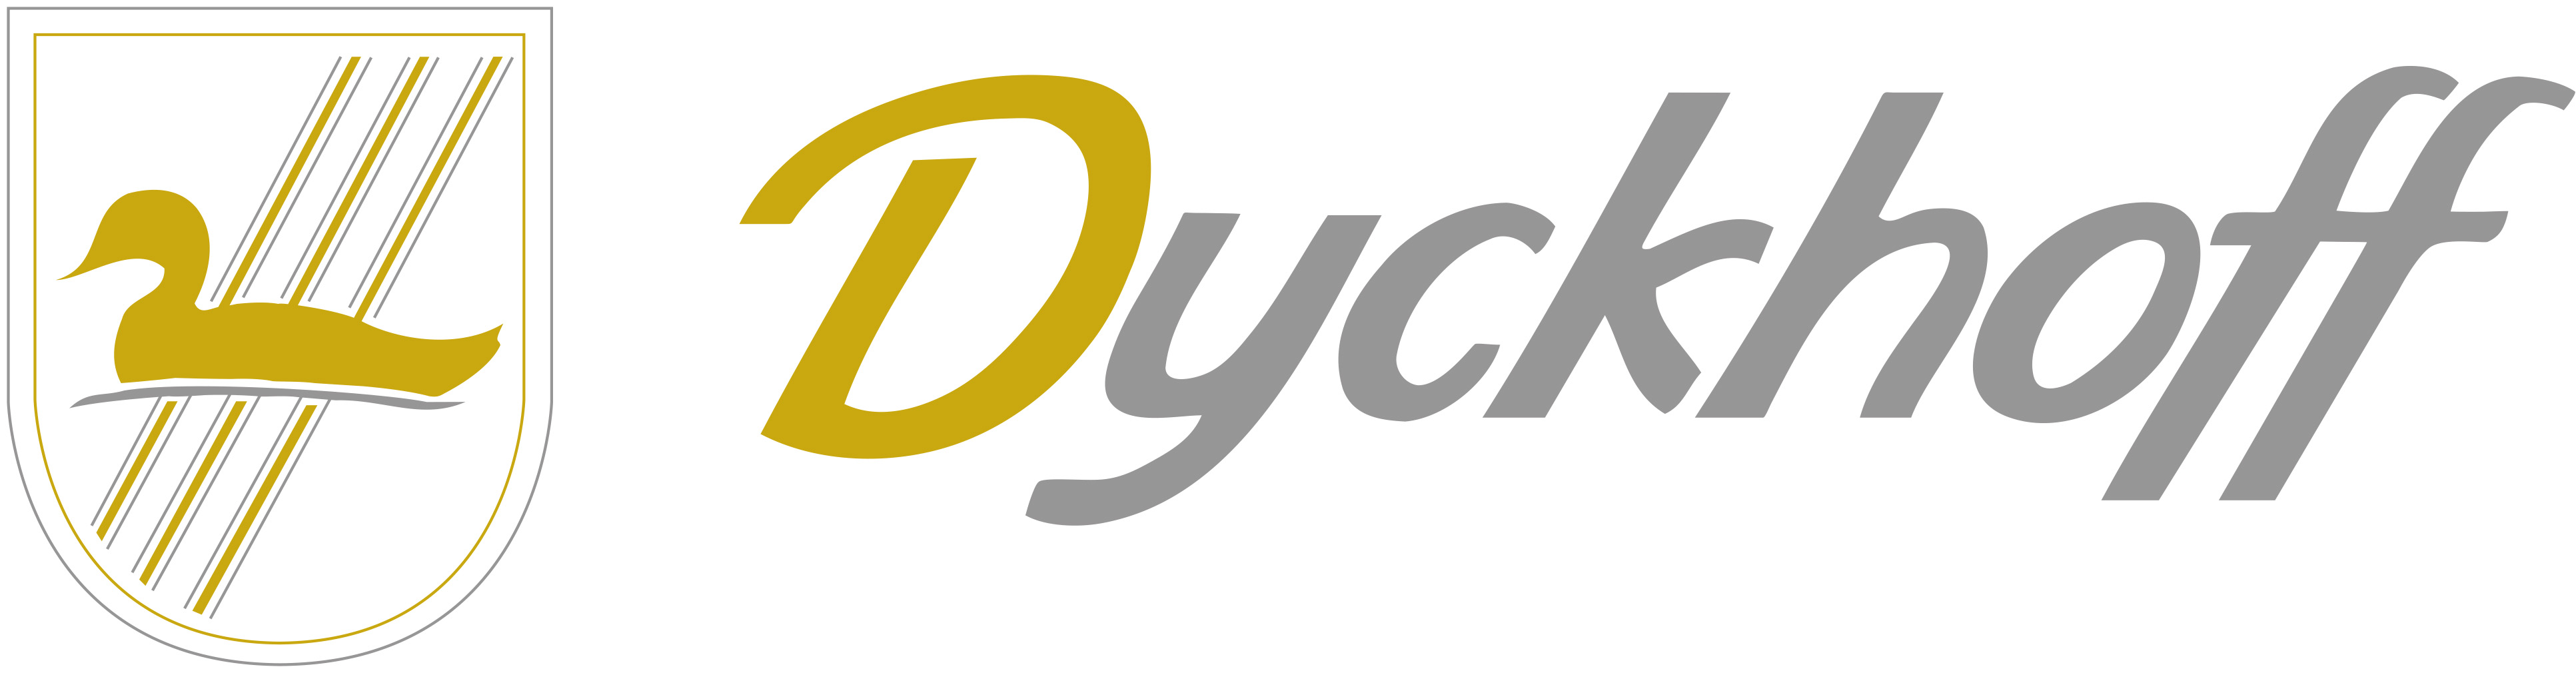 Produkte Dyckhoff GmbH |